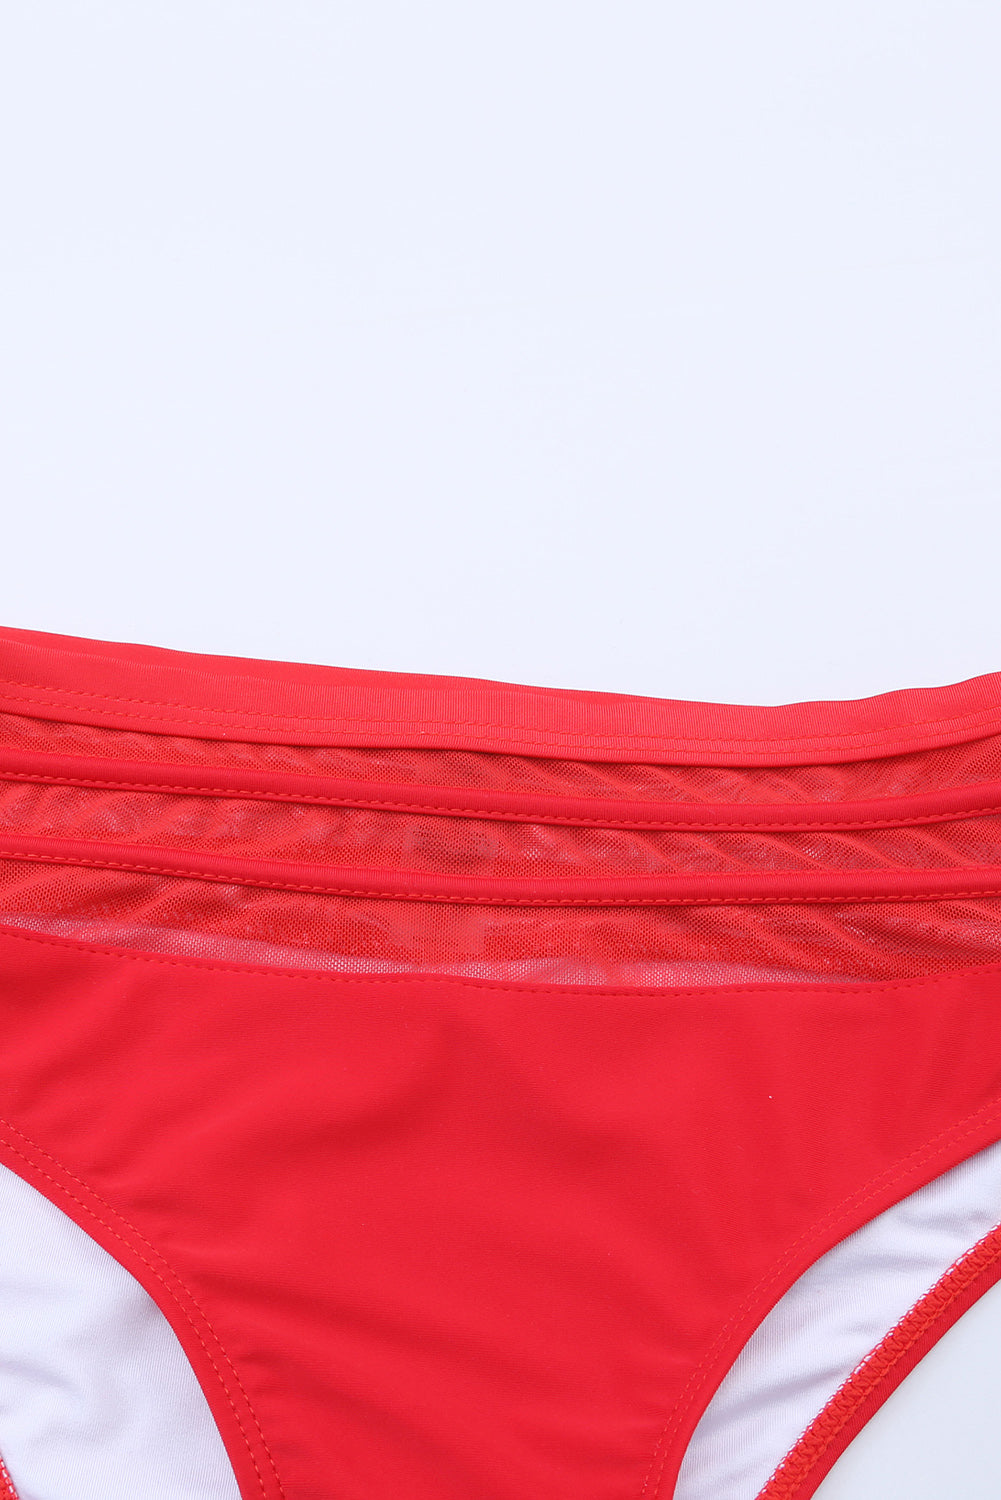 Red Scalloped Criss Cross High Waist Bikini